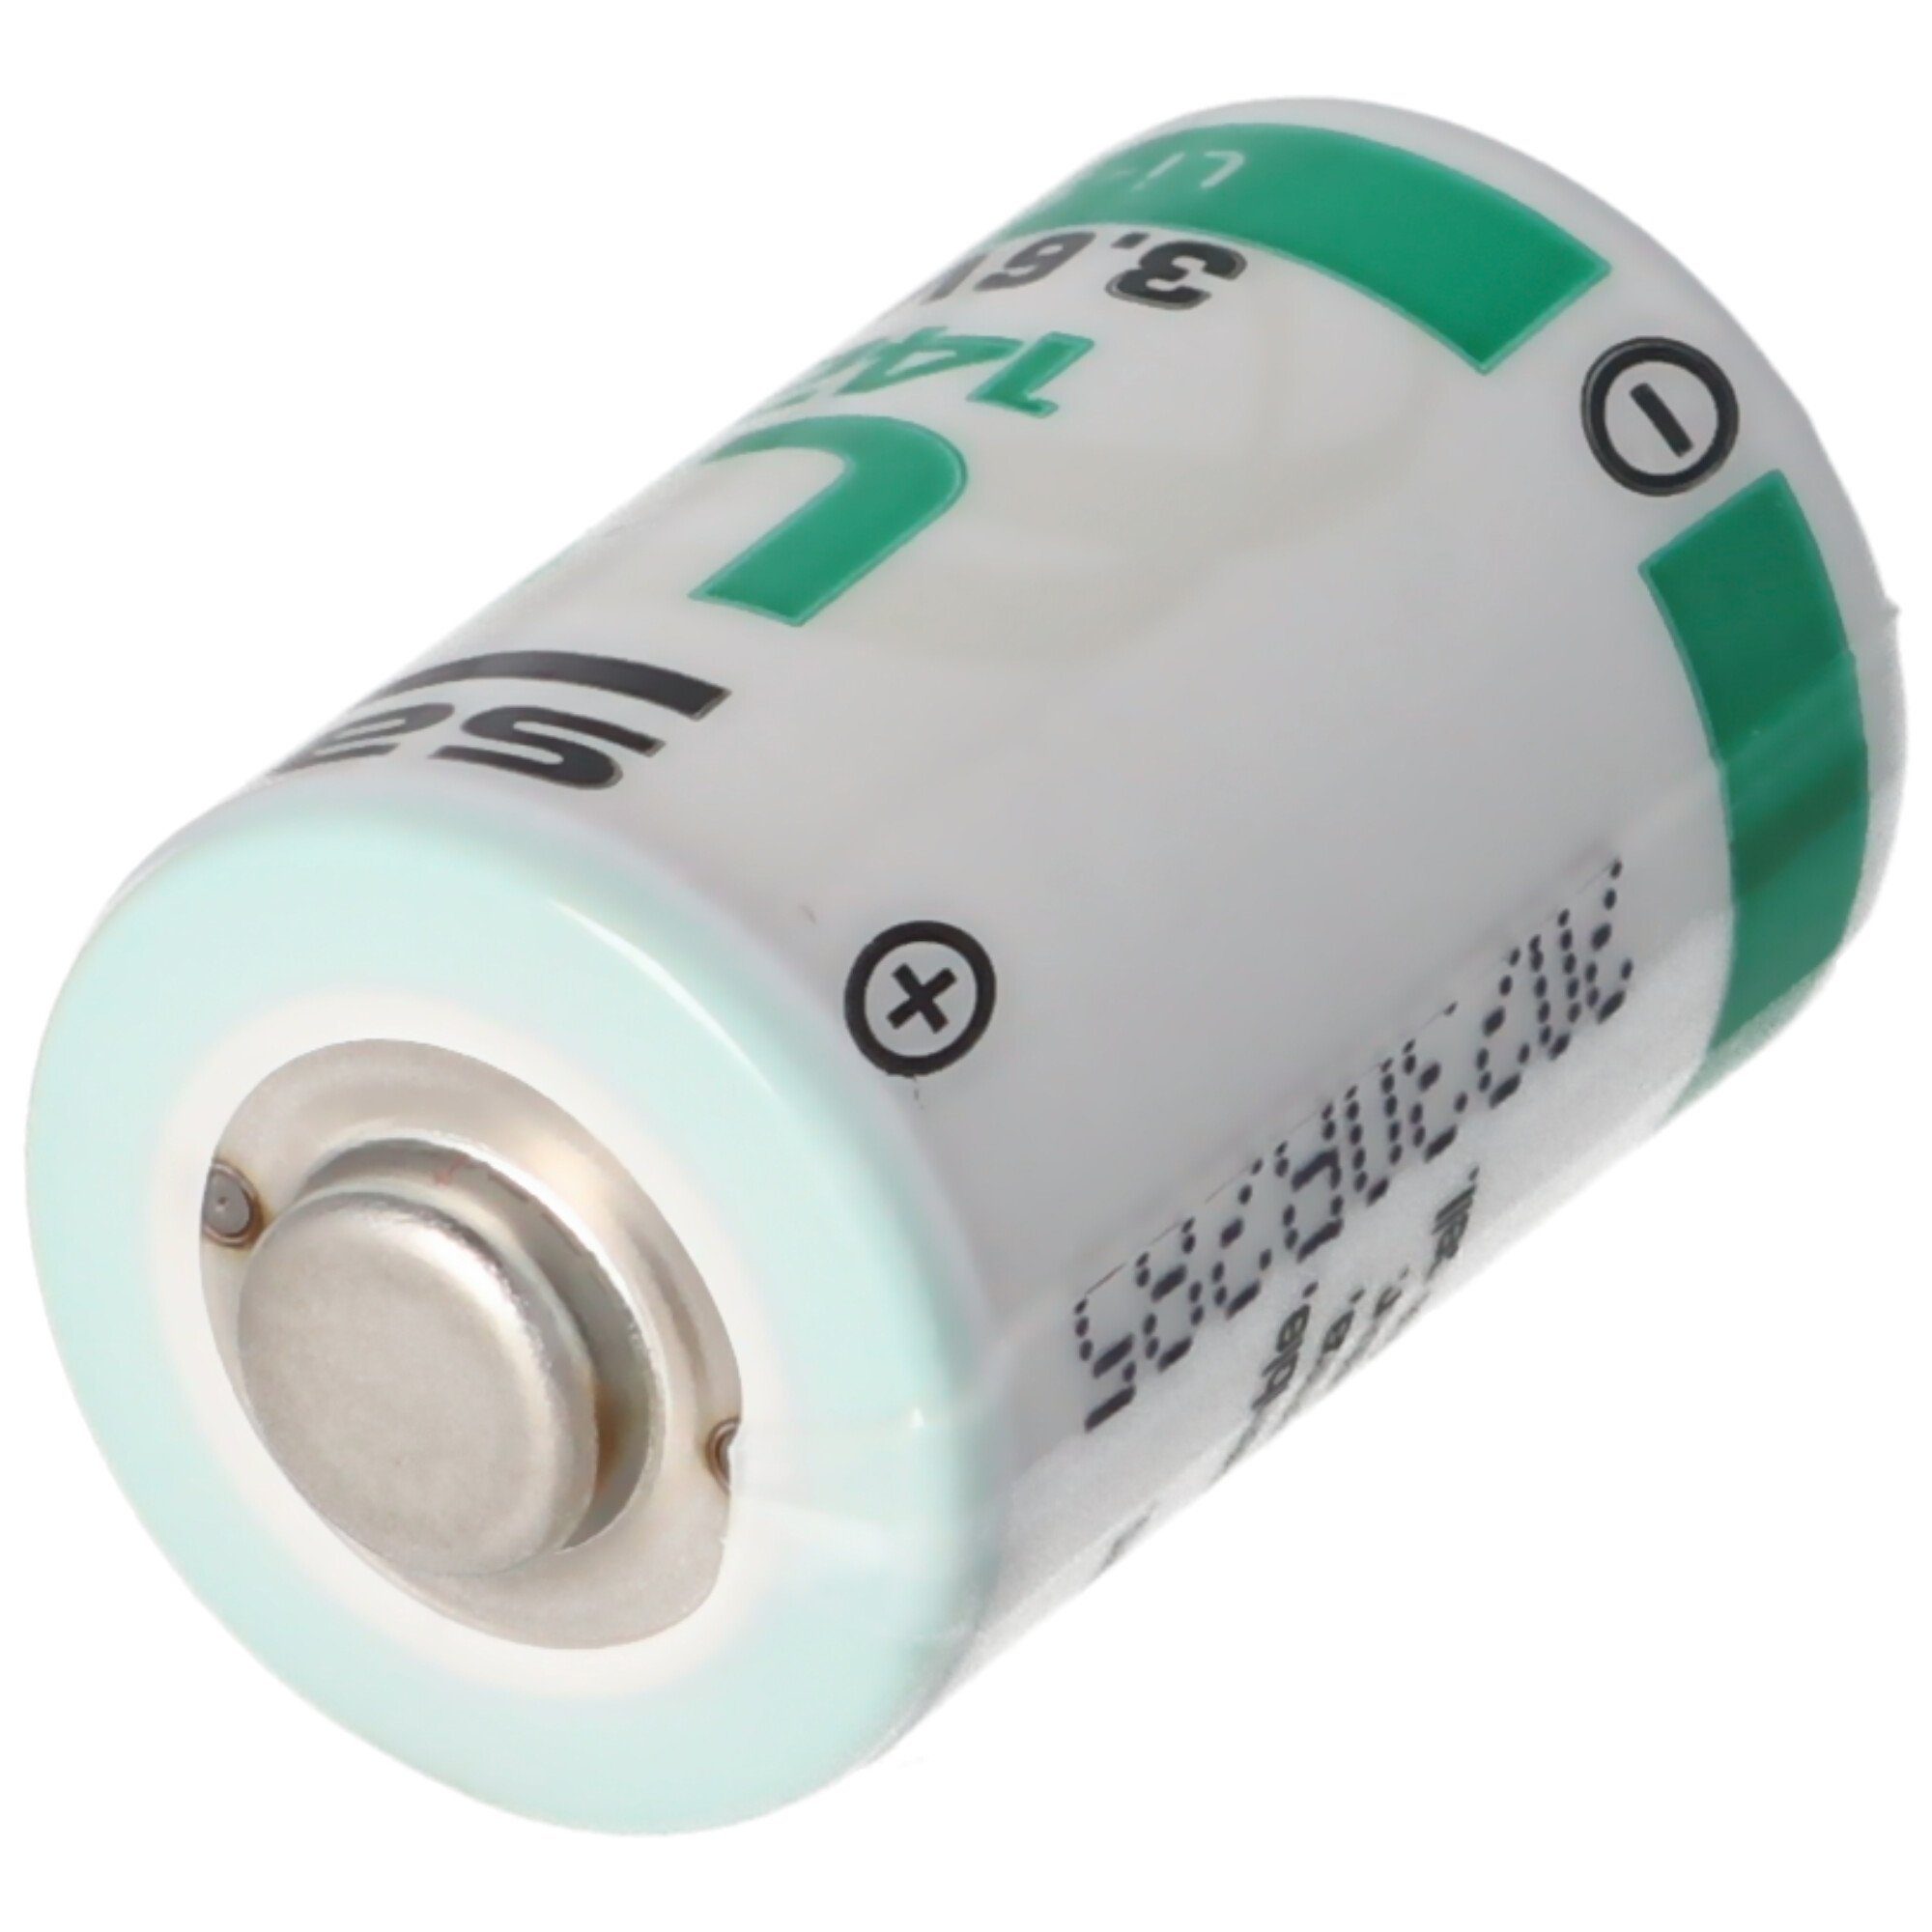 Saft SAFT Batterie, Size (3,6 Li-SOCI2, Batterie LS14250 LST14250 1/2 AA V) Lithium